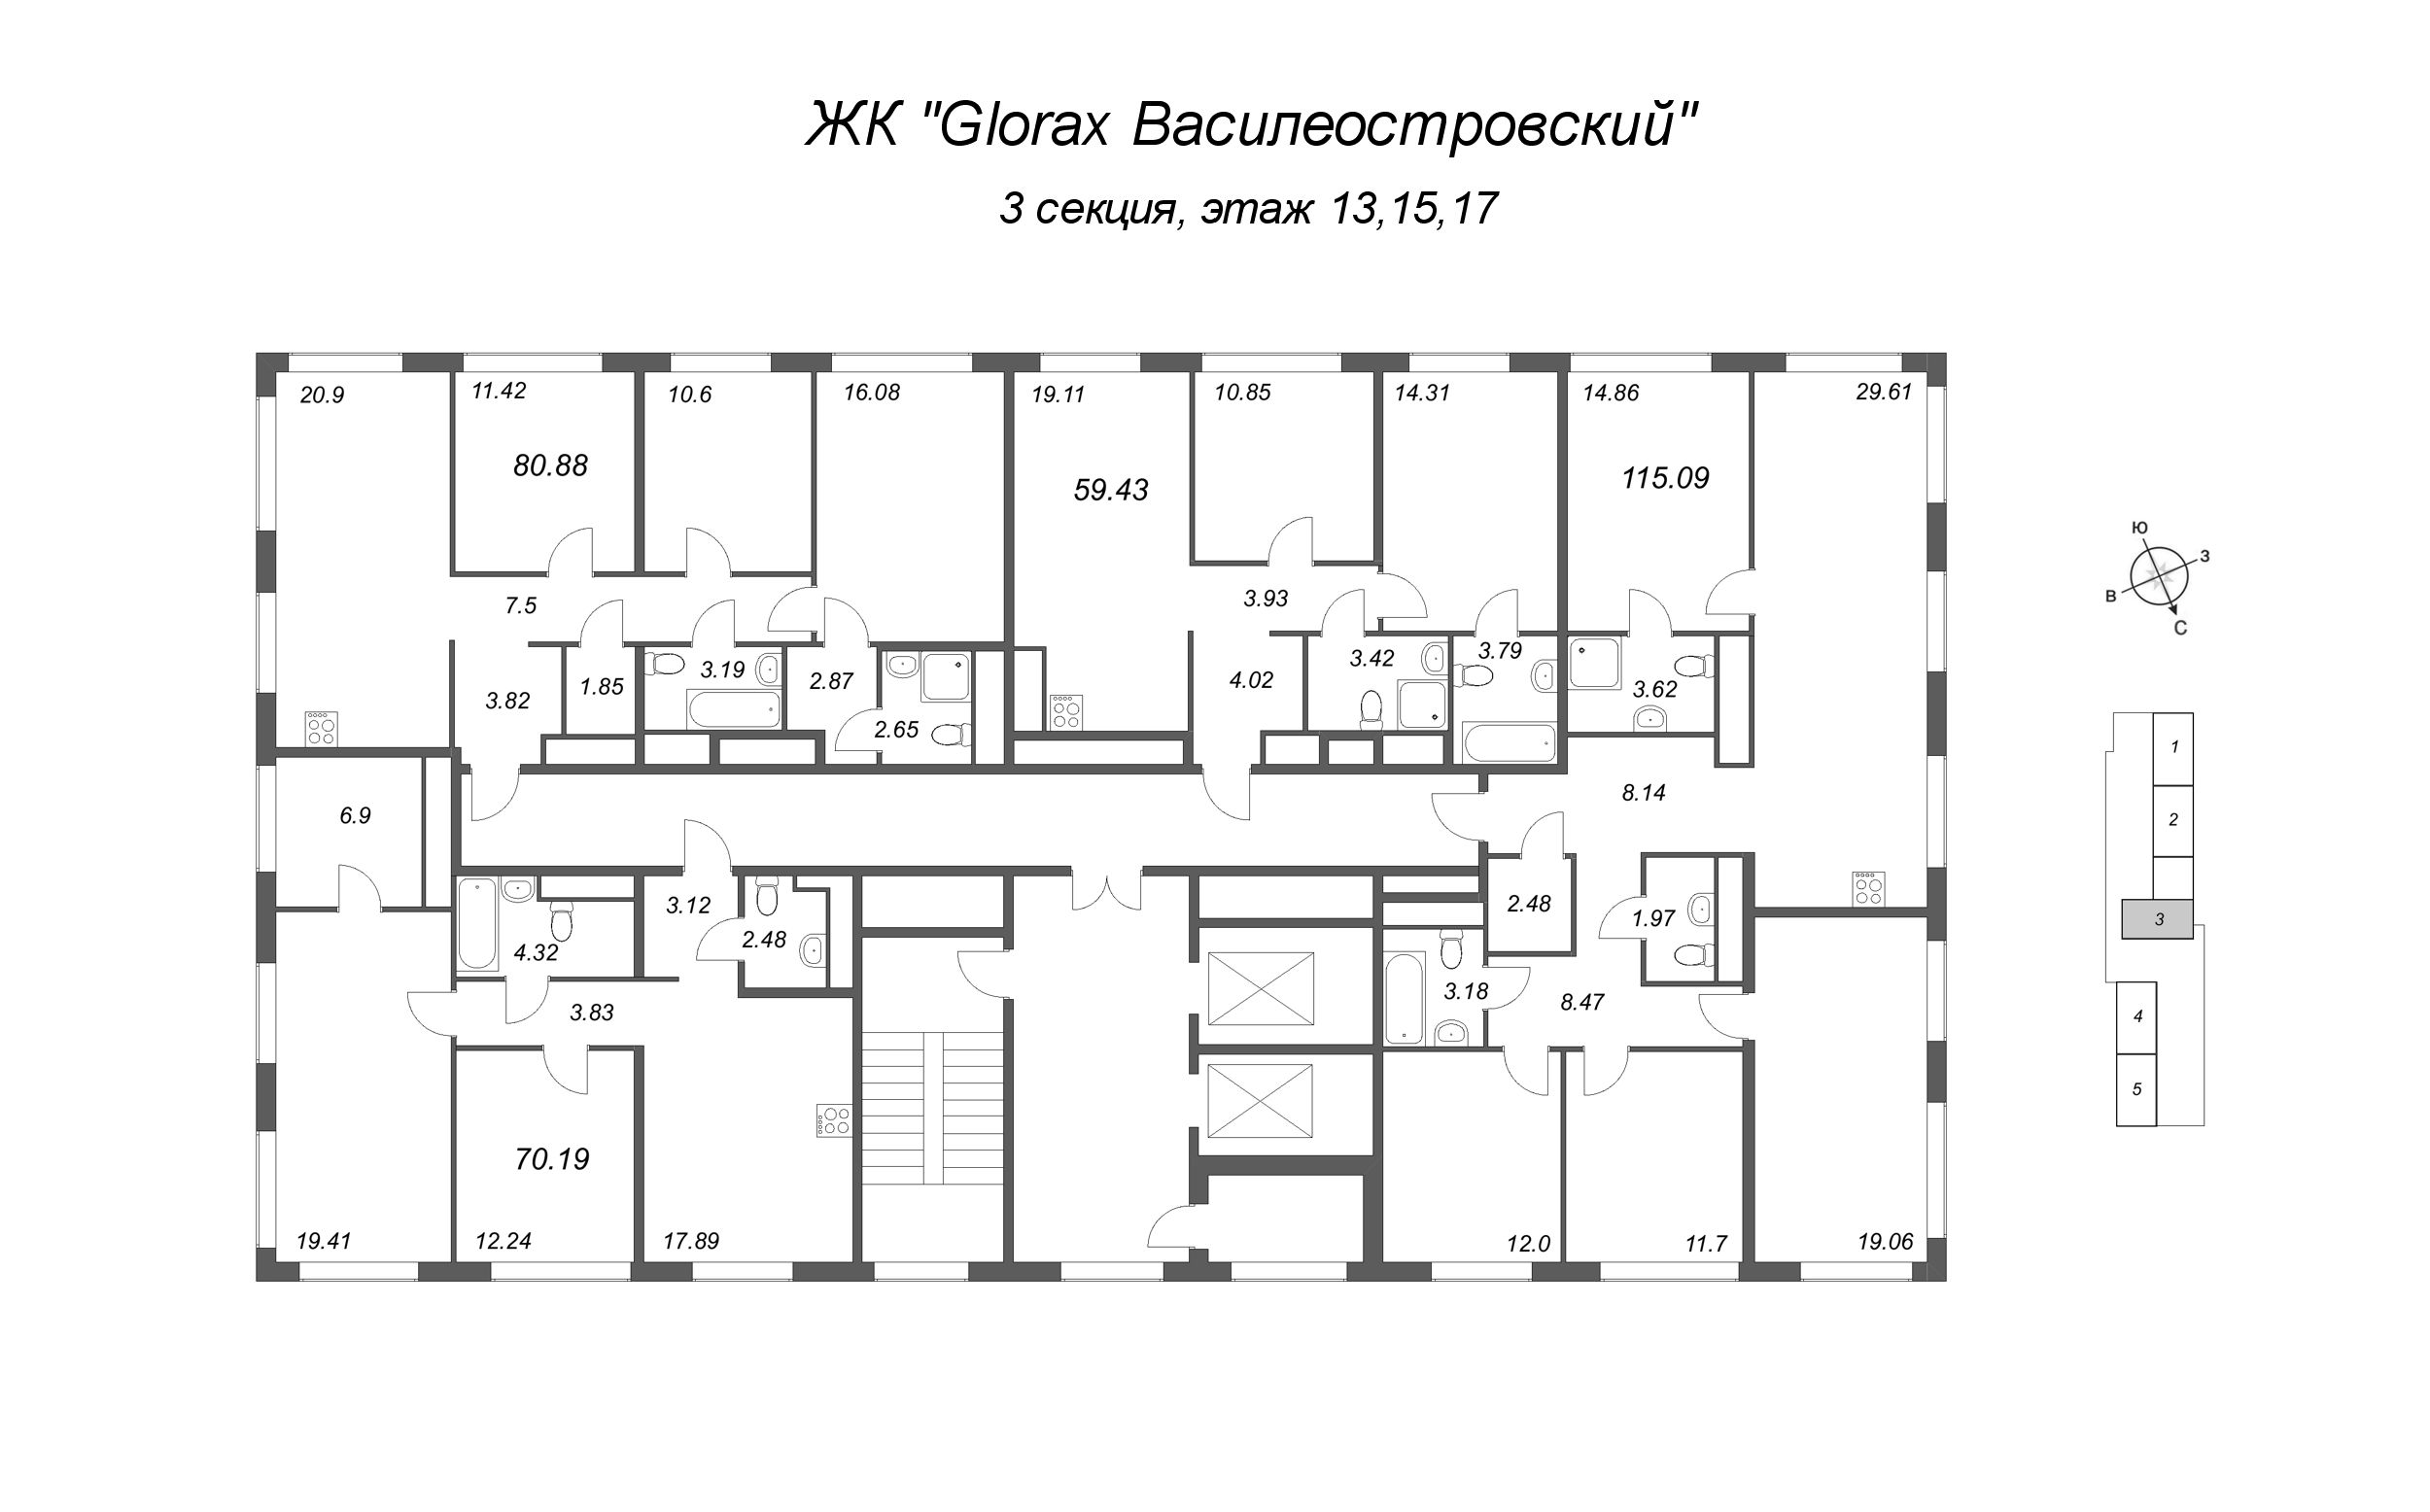 3-комнатная (Евро) квартира, 59.43 м² - планировка этажа